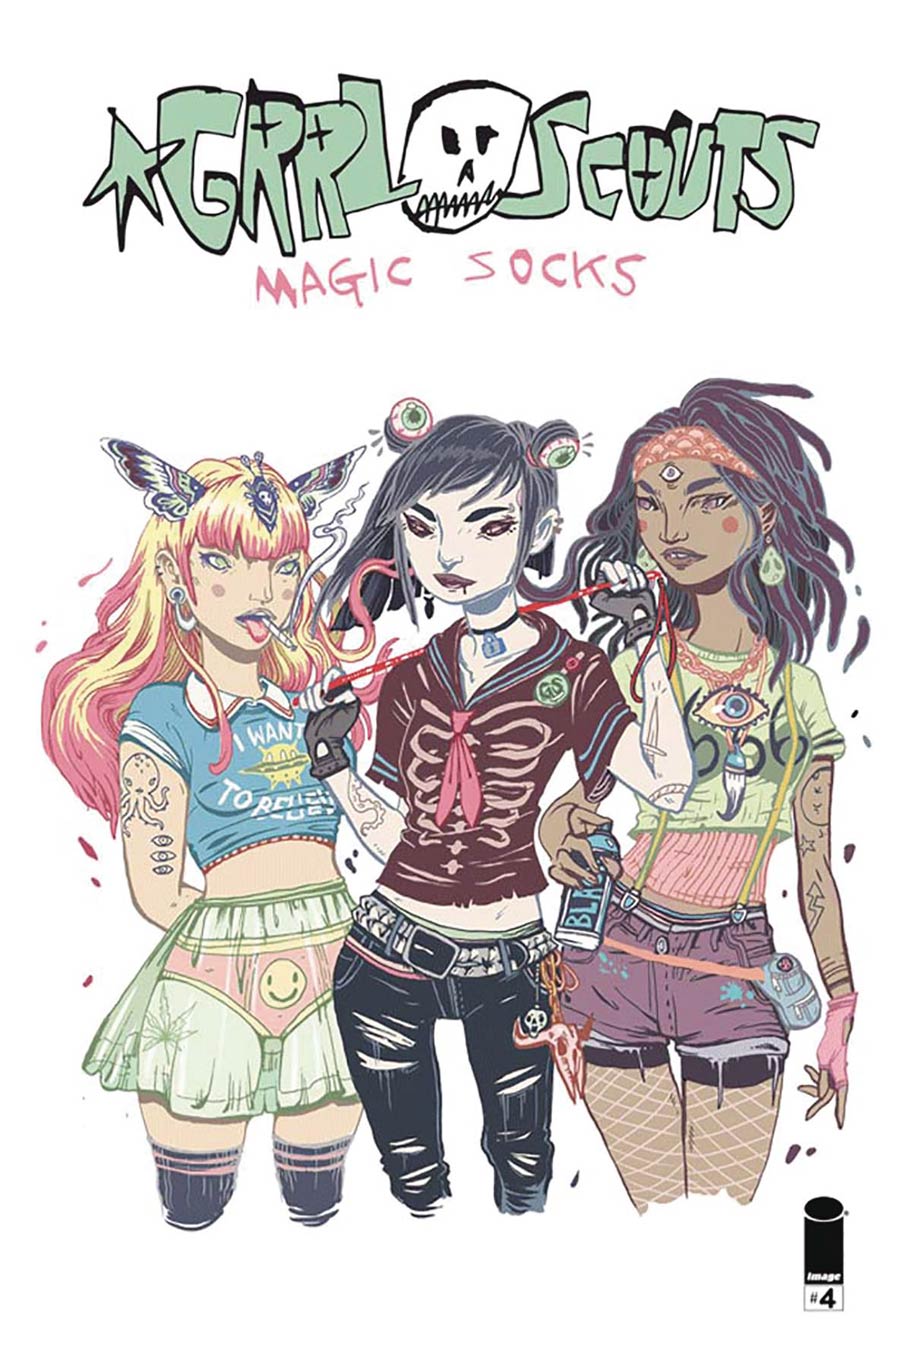 Undercover: 'Grrl Scouts: Magic Socks' #4